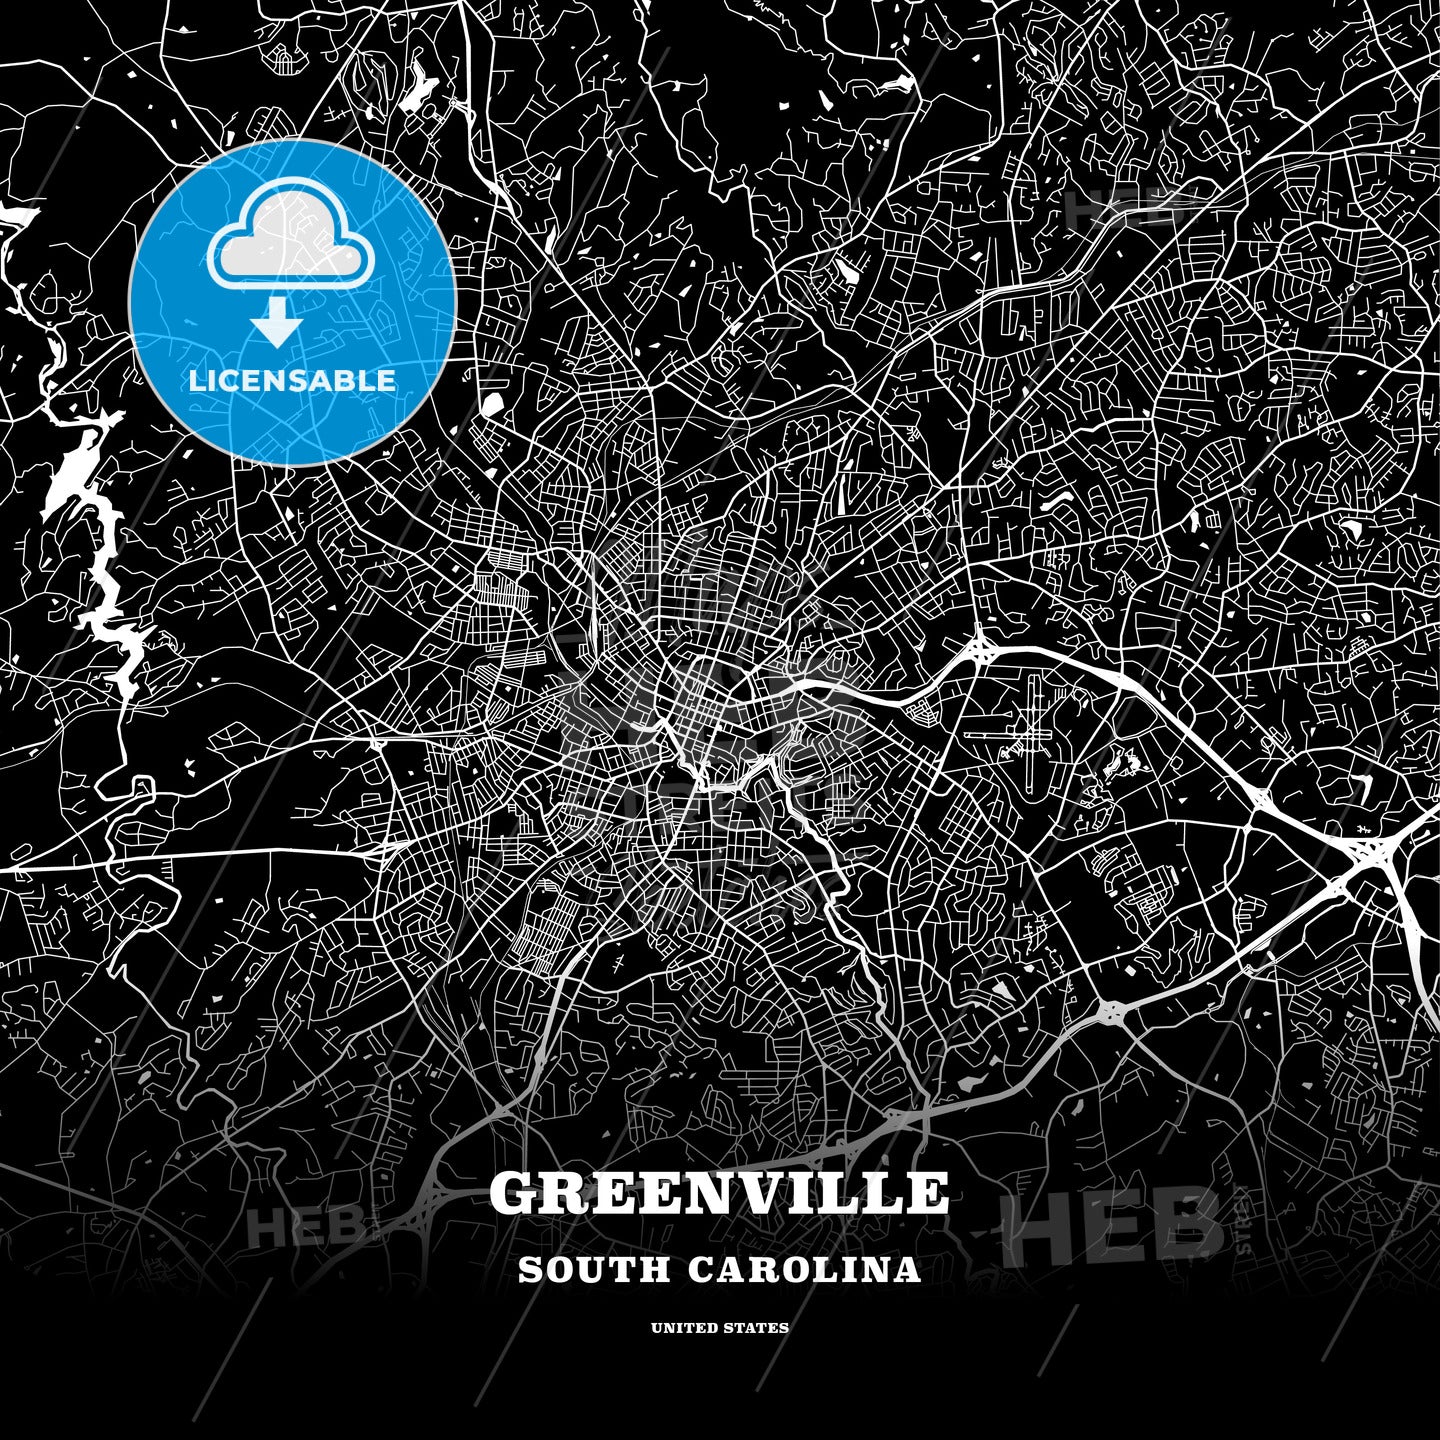 Greenville, South Carolina, USA map